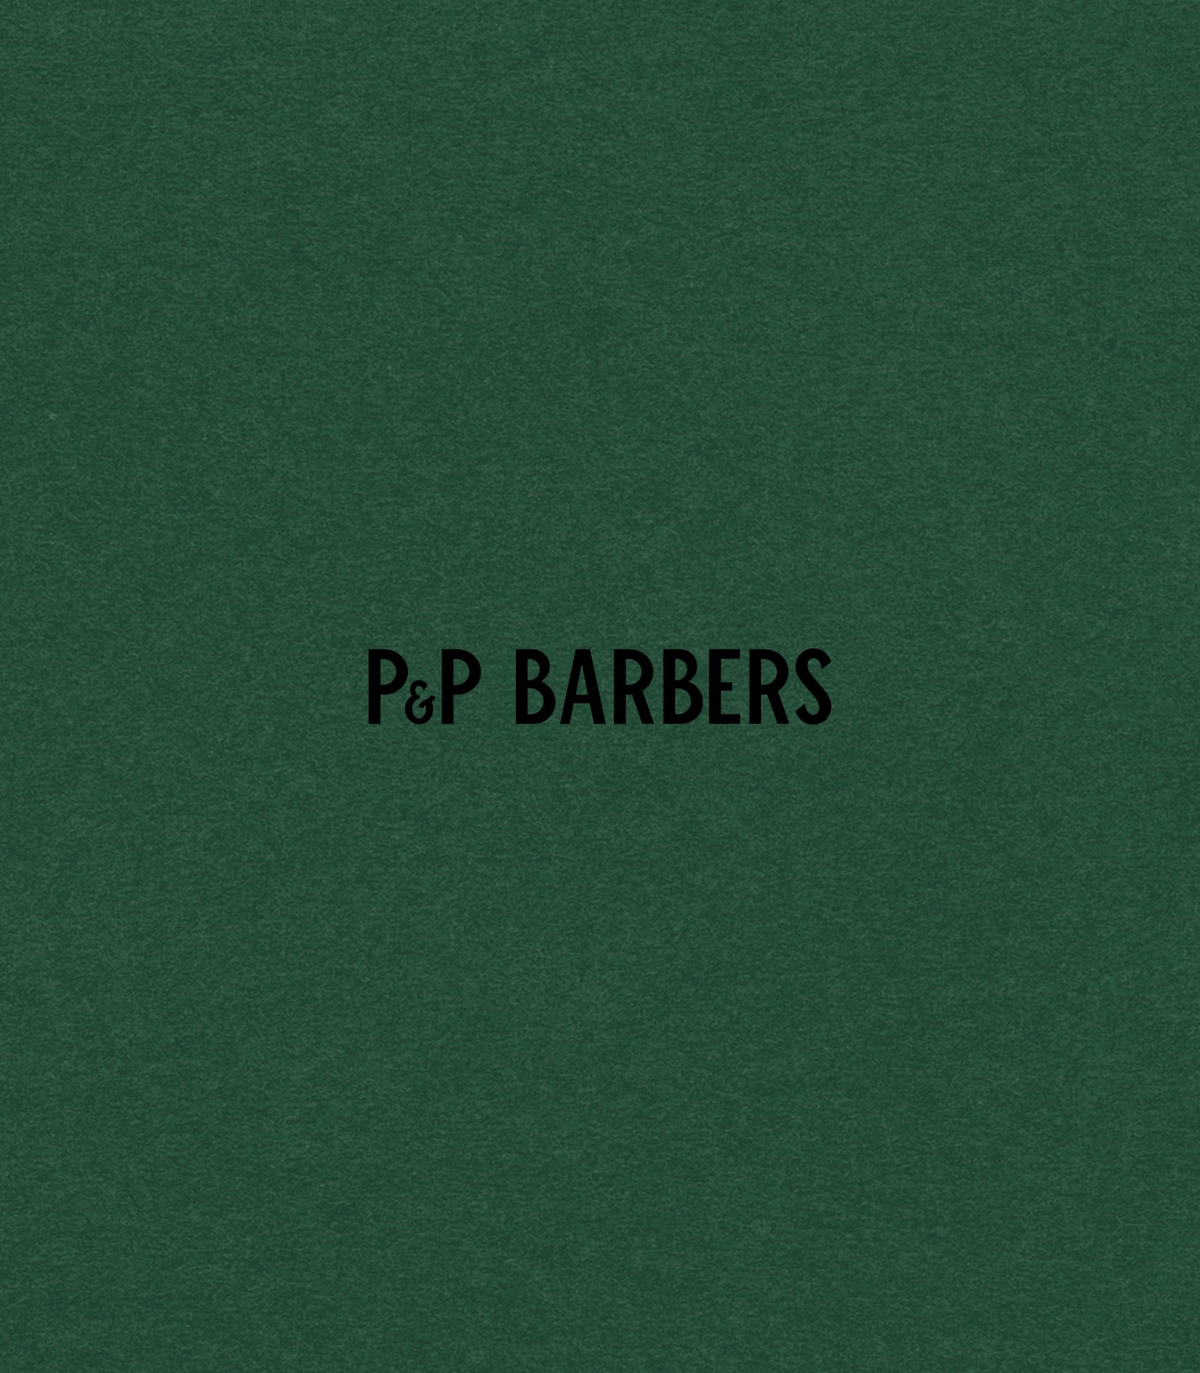 PP Barbers - Brand and Website - Brandmark | Atollon - a design company